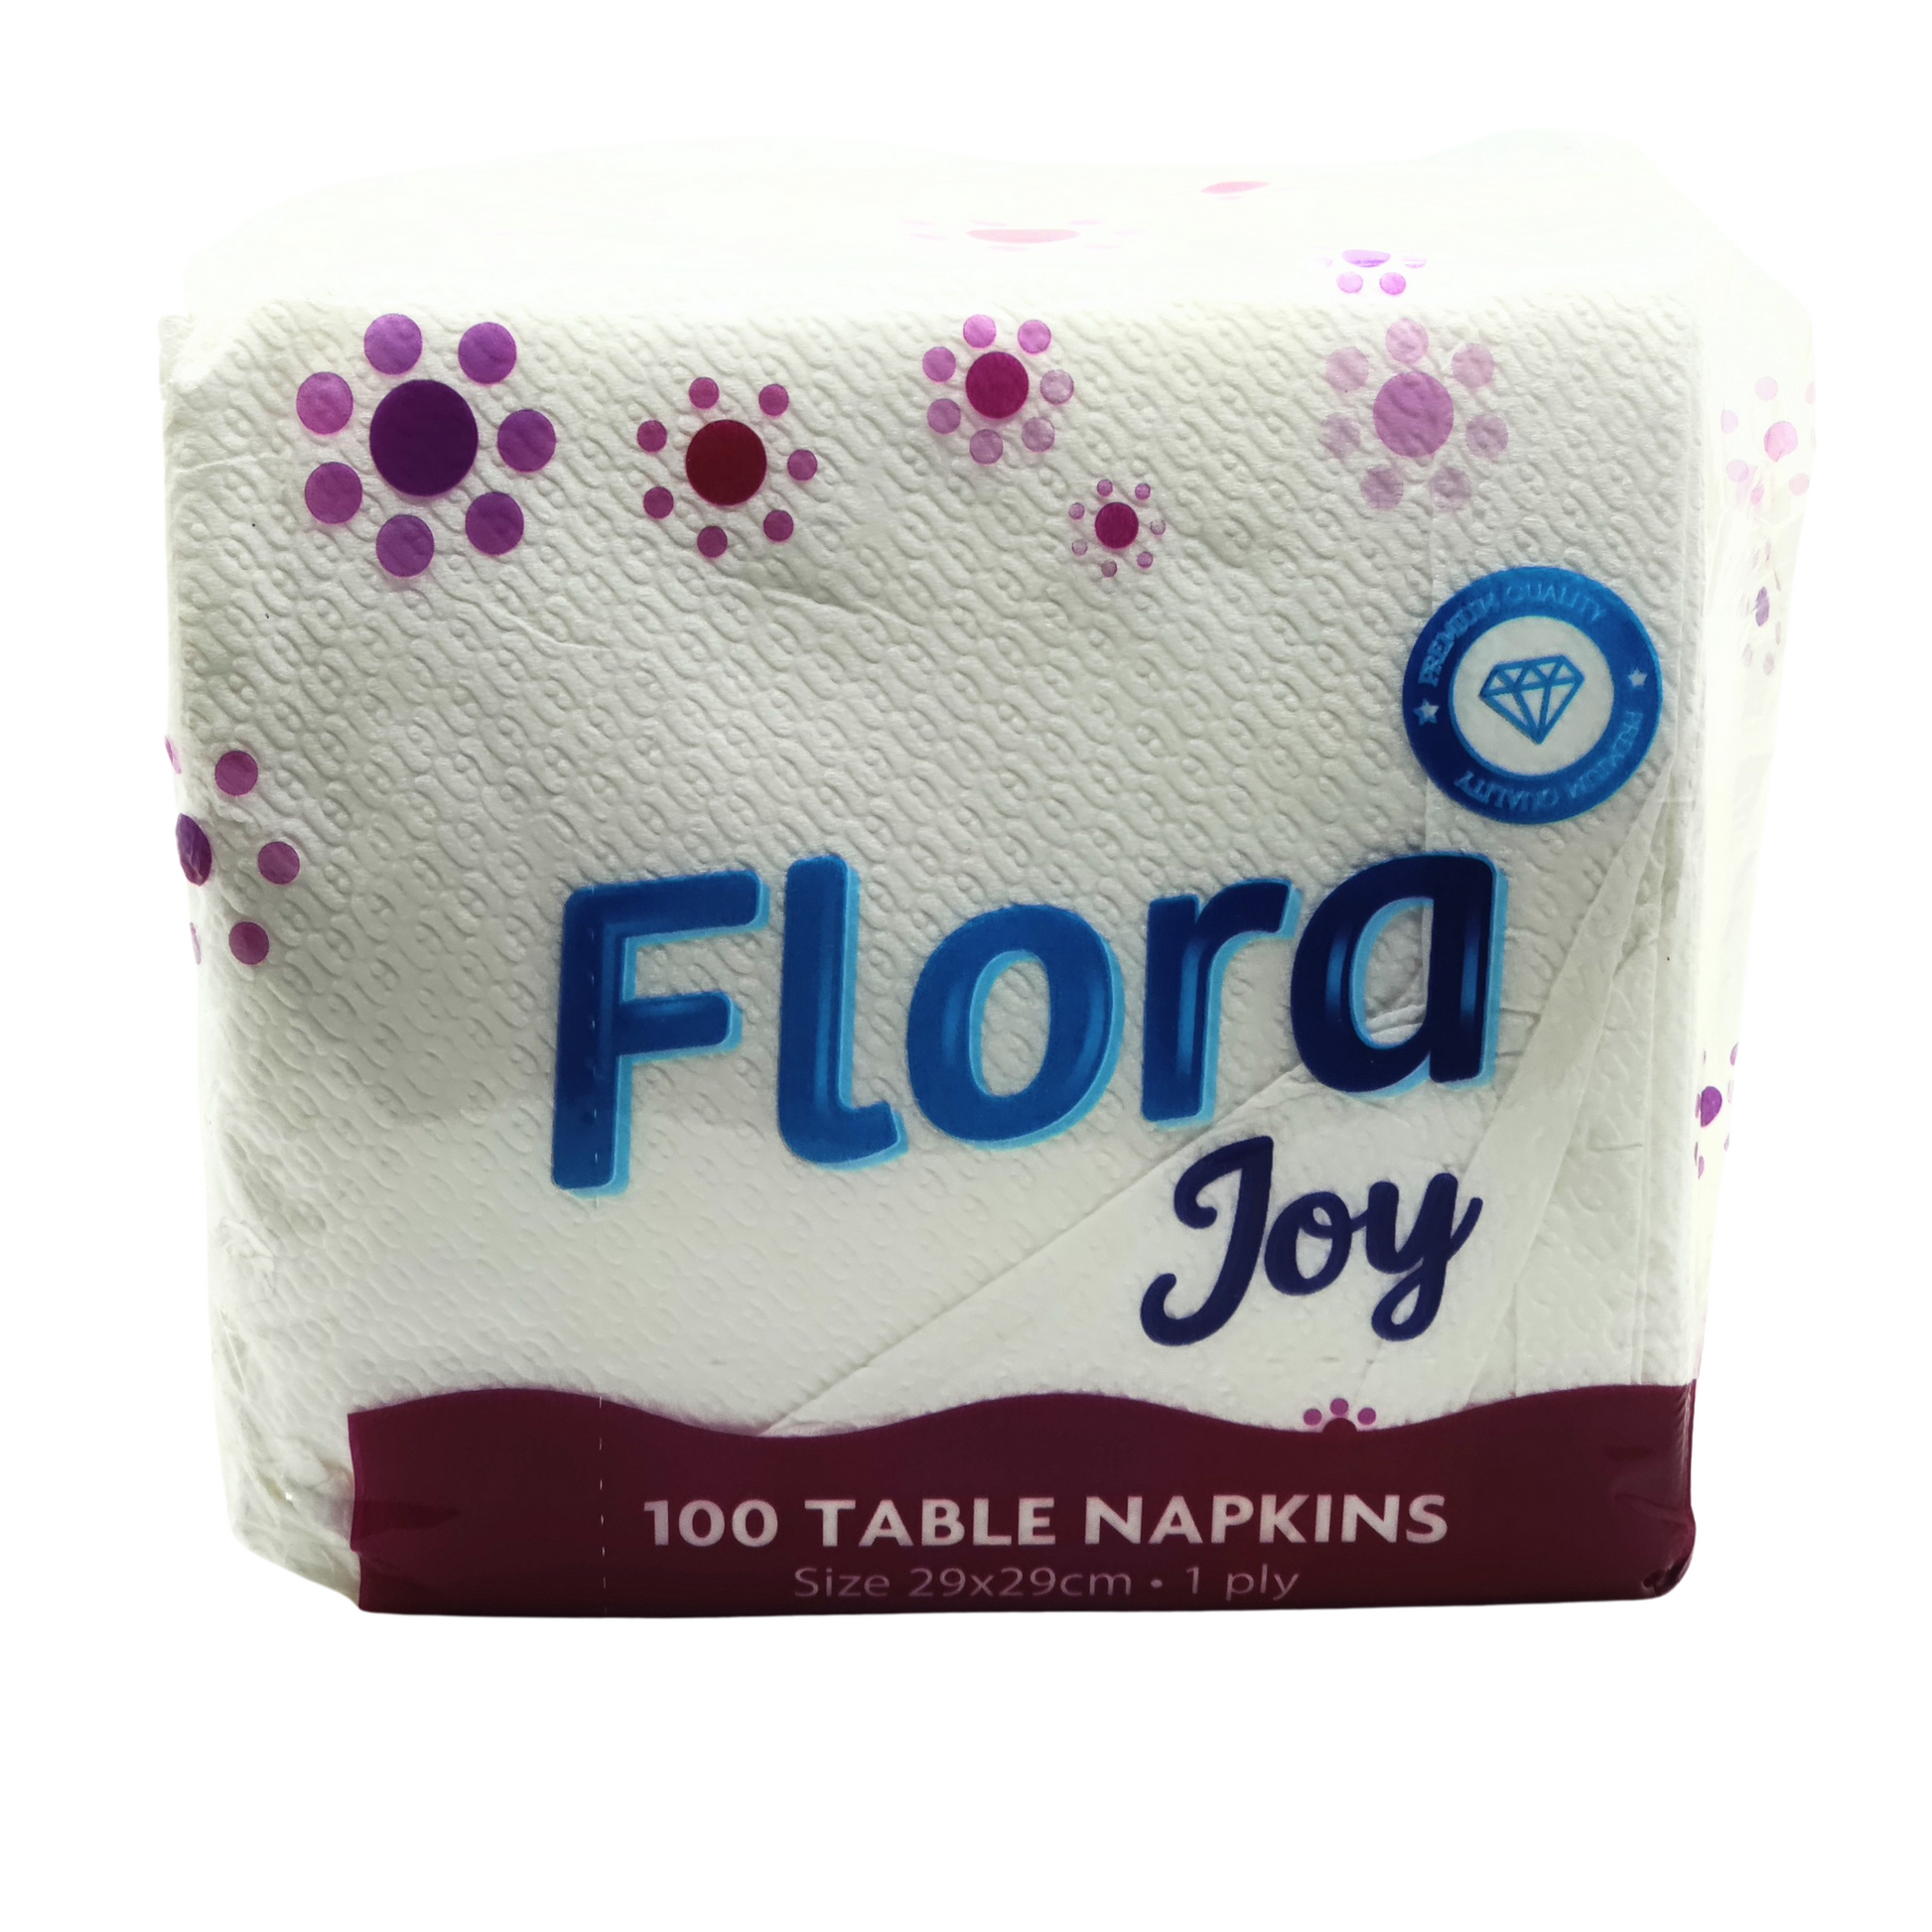 Pack of Flora joy table napkins